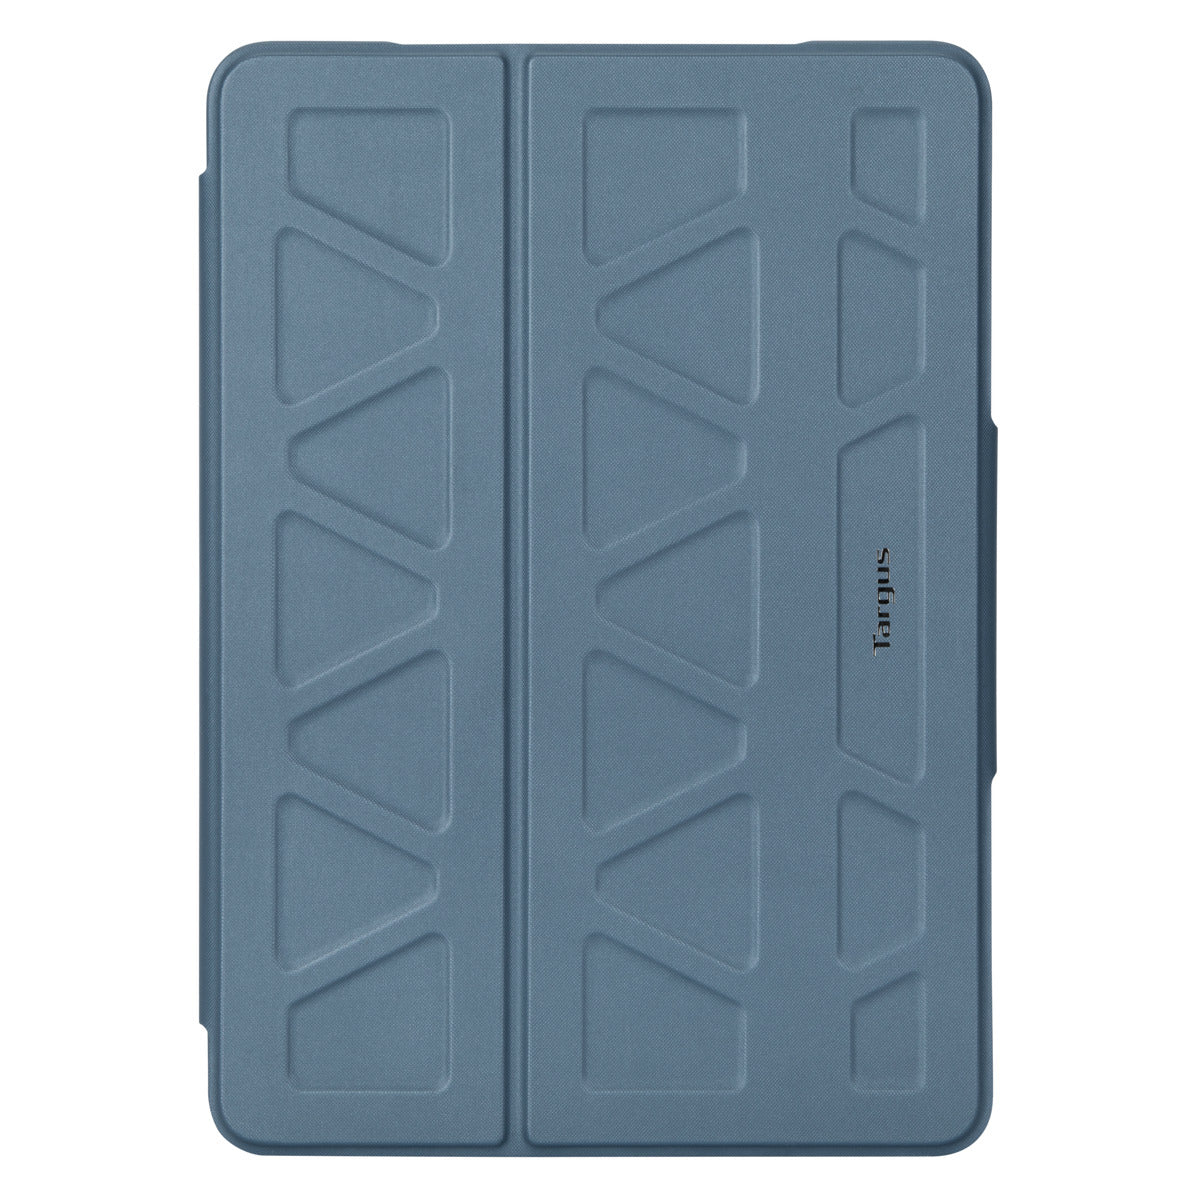 iPad Pro (10.5-inch) Cases & Accessories